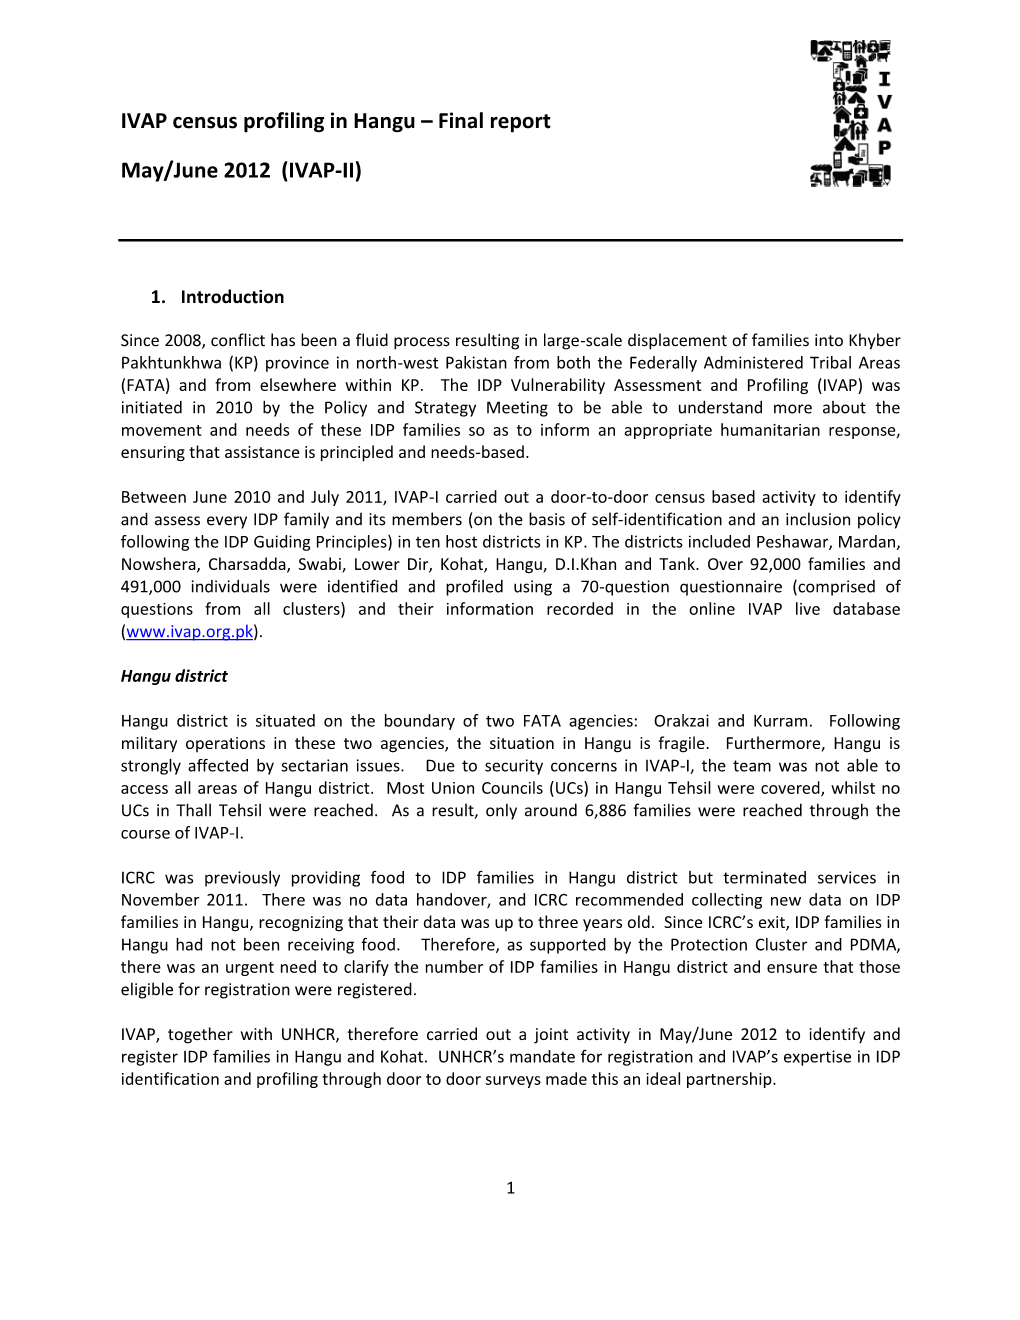 IVAP Census Profiling in Hangu – Final Report May/June 2012 (IVAP-II)